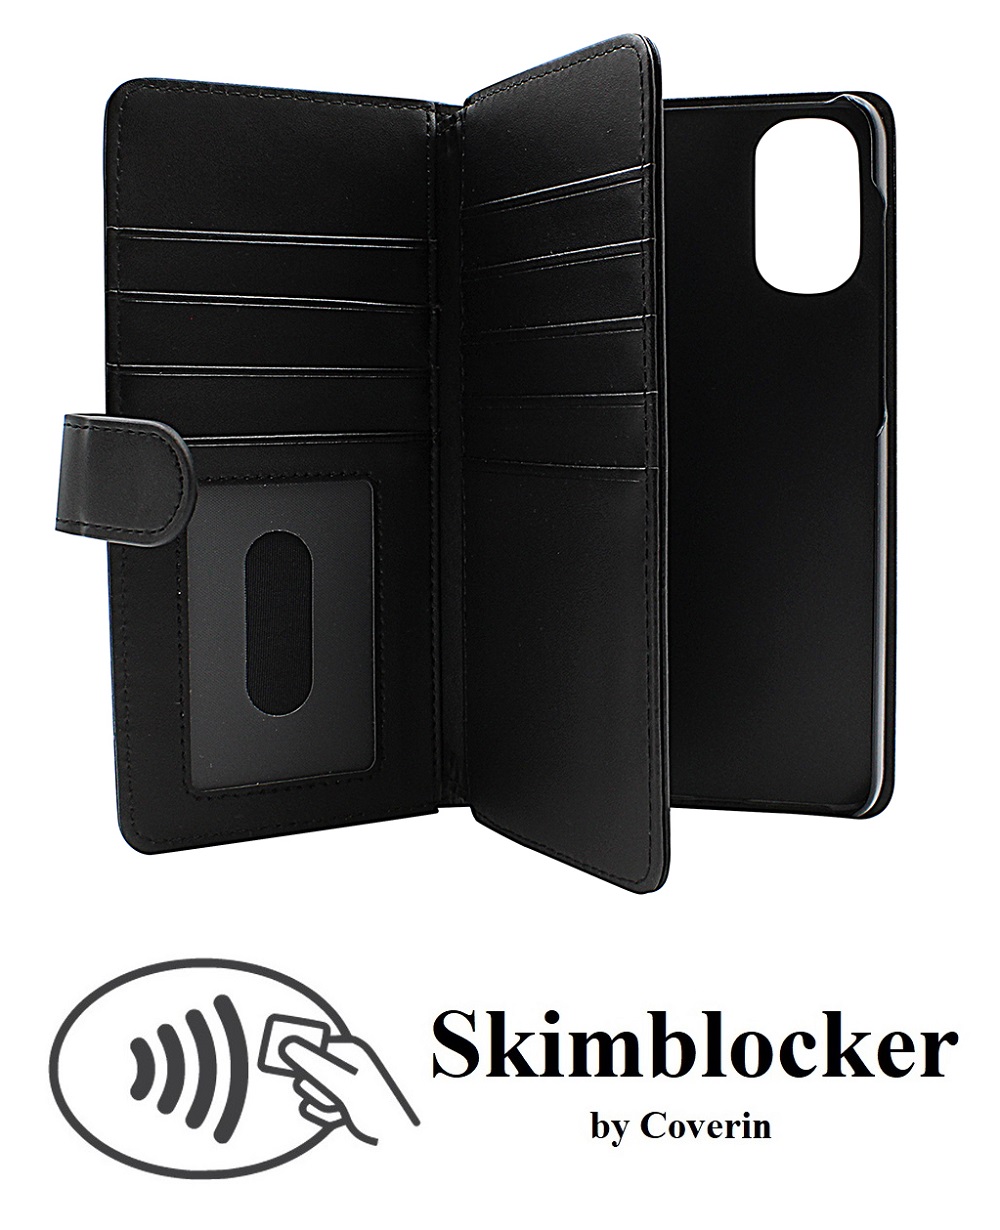 Skimblocker XL Wallet Motorola Moto G22